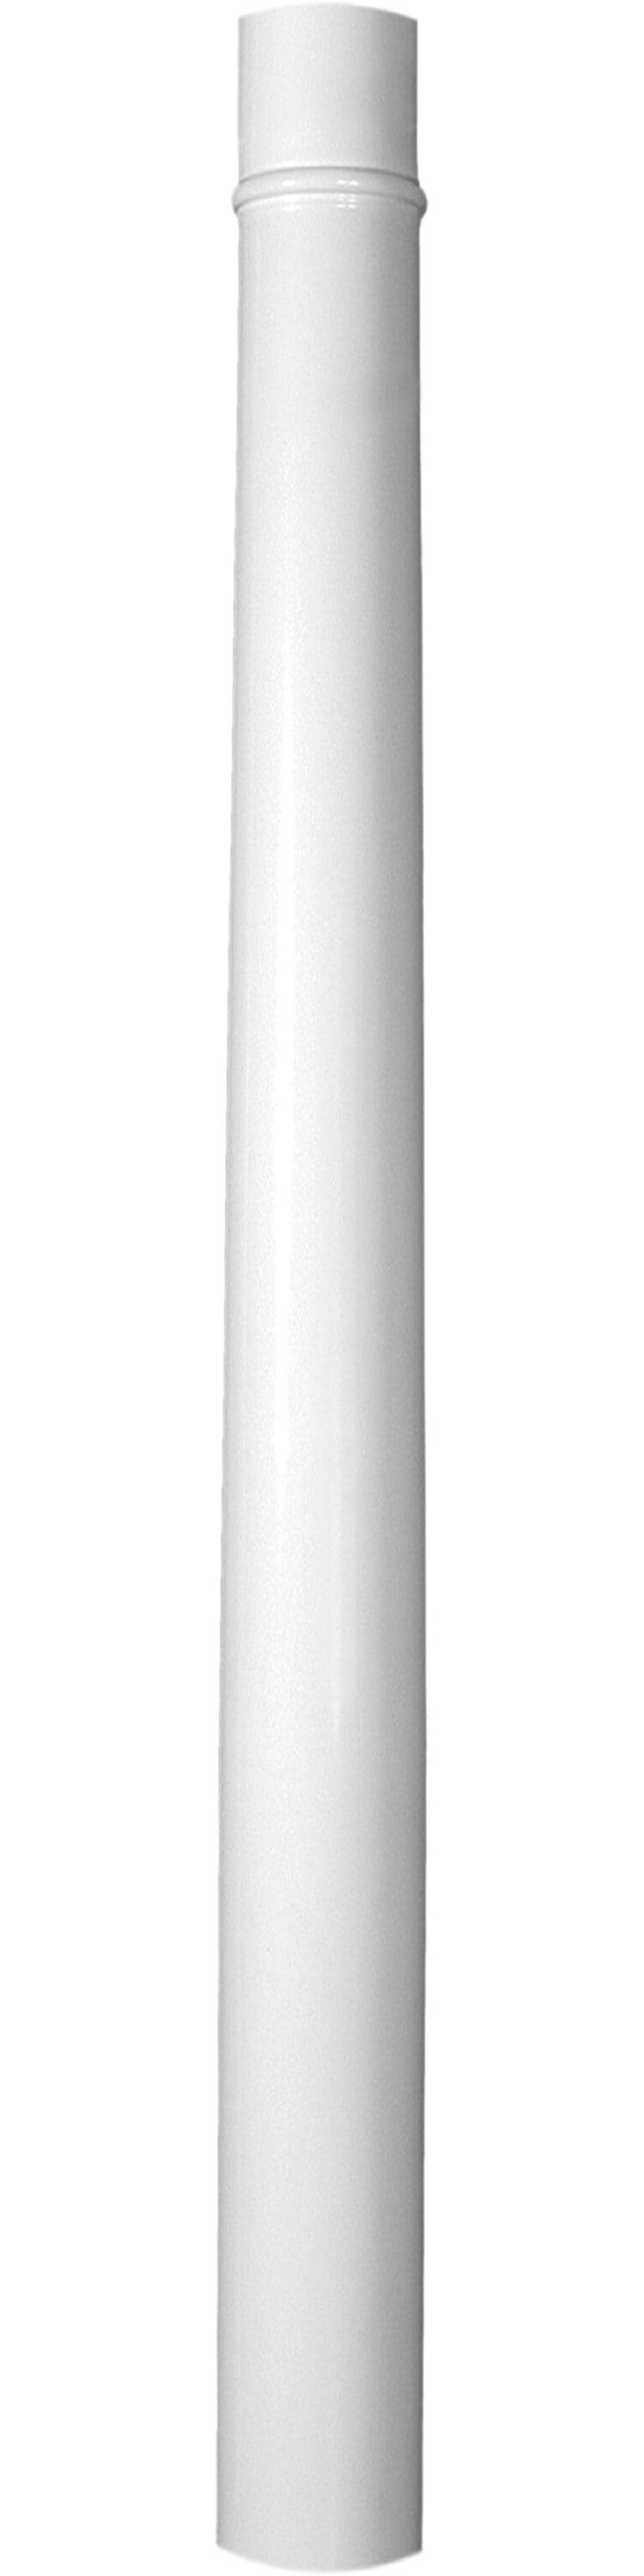 Pole Wrap™ CB (20” x 25' per roll) - Order Now!